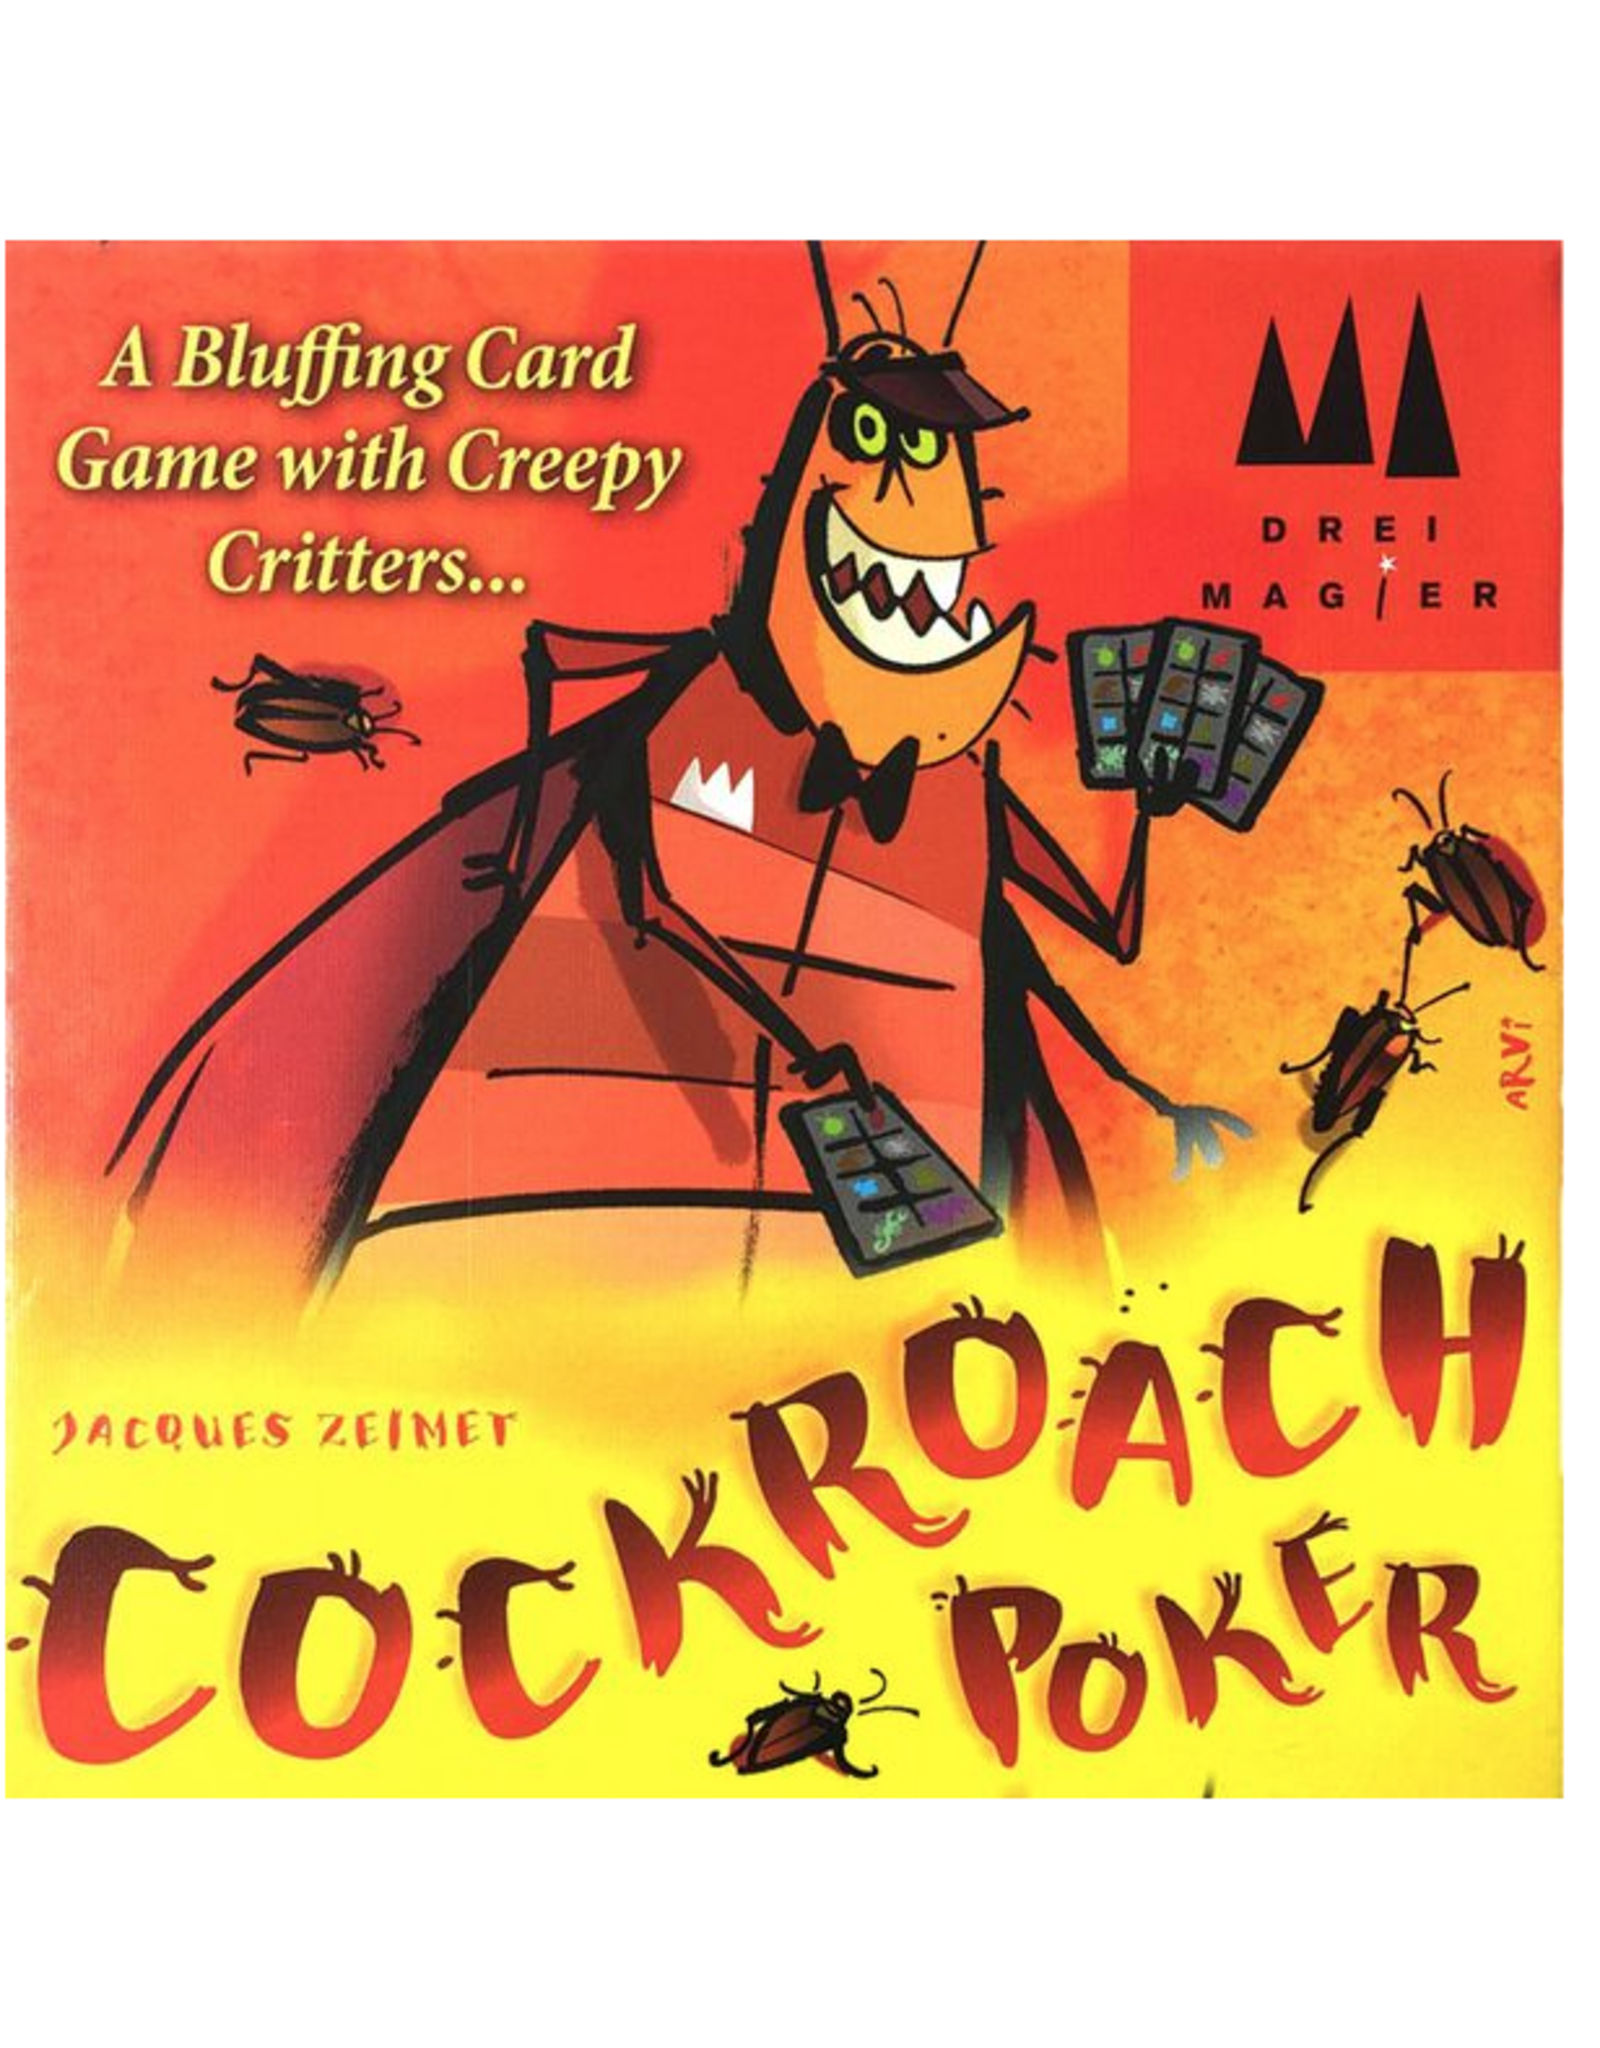 Devir Cockroach Poker